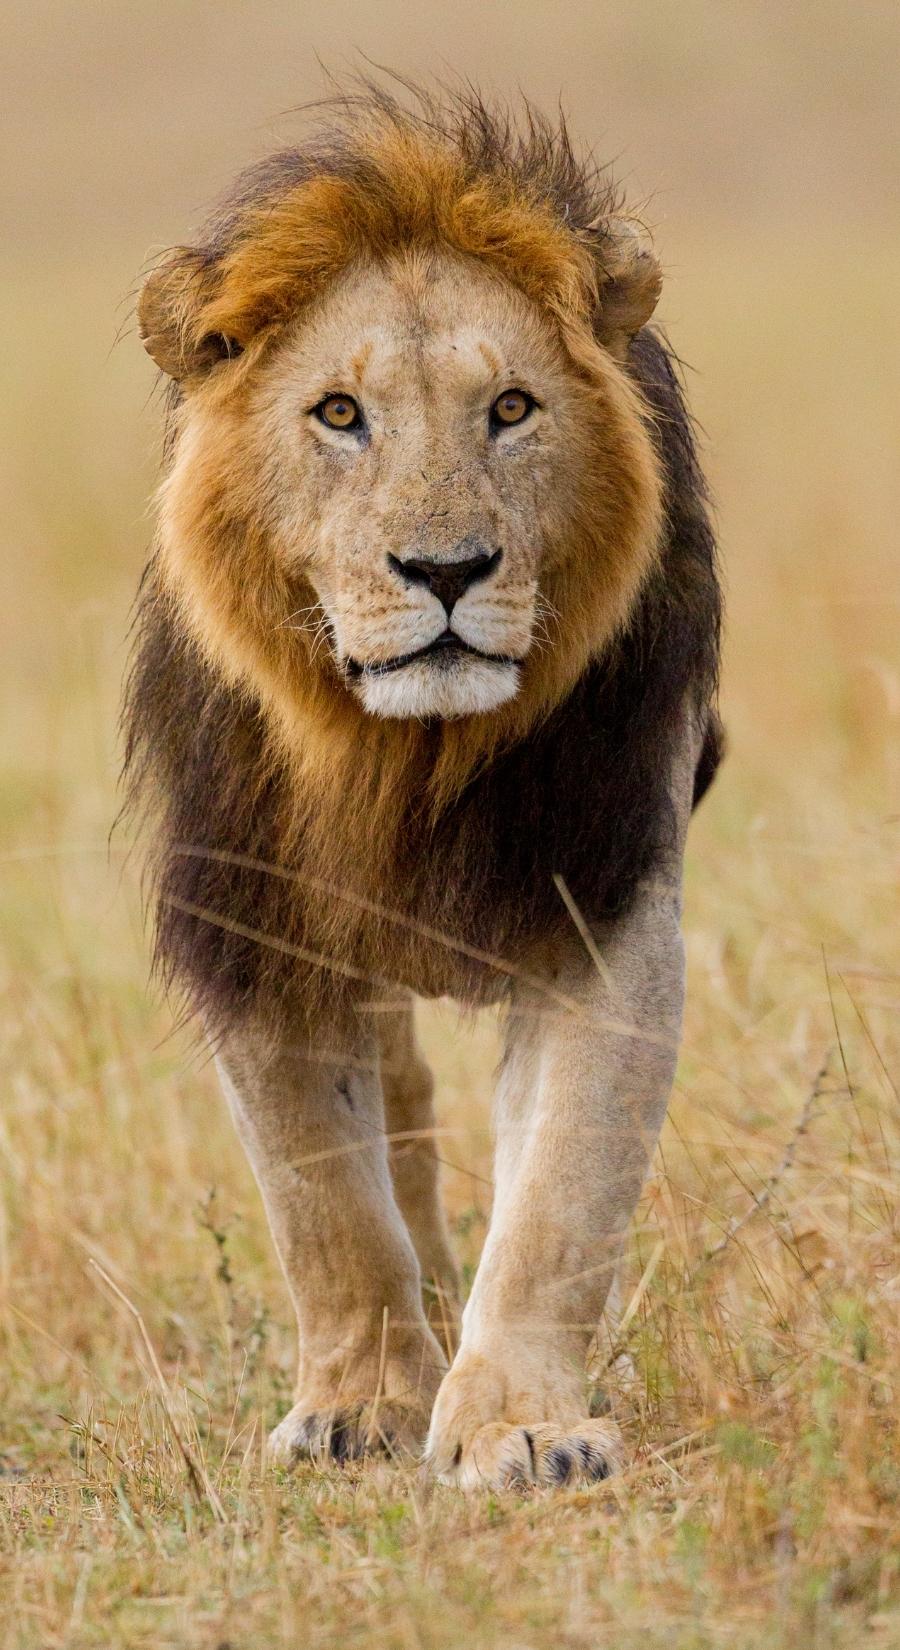 Lion Walking in grass